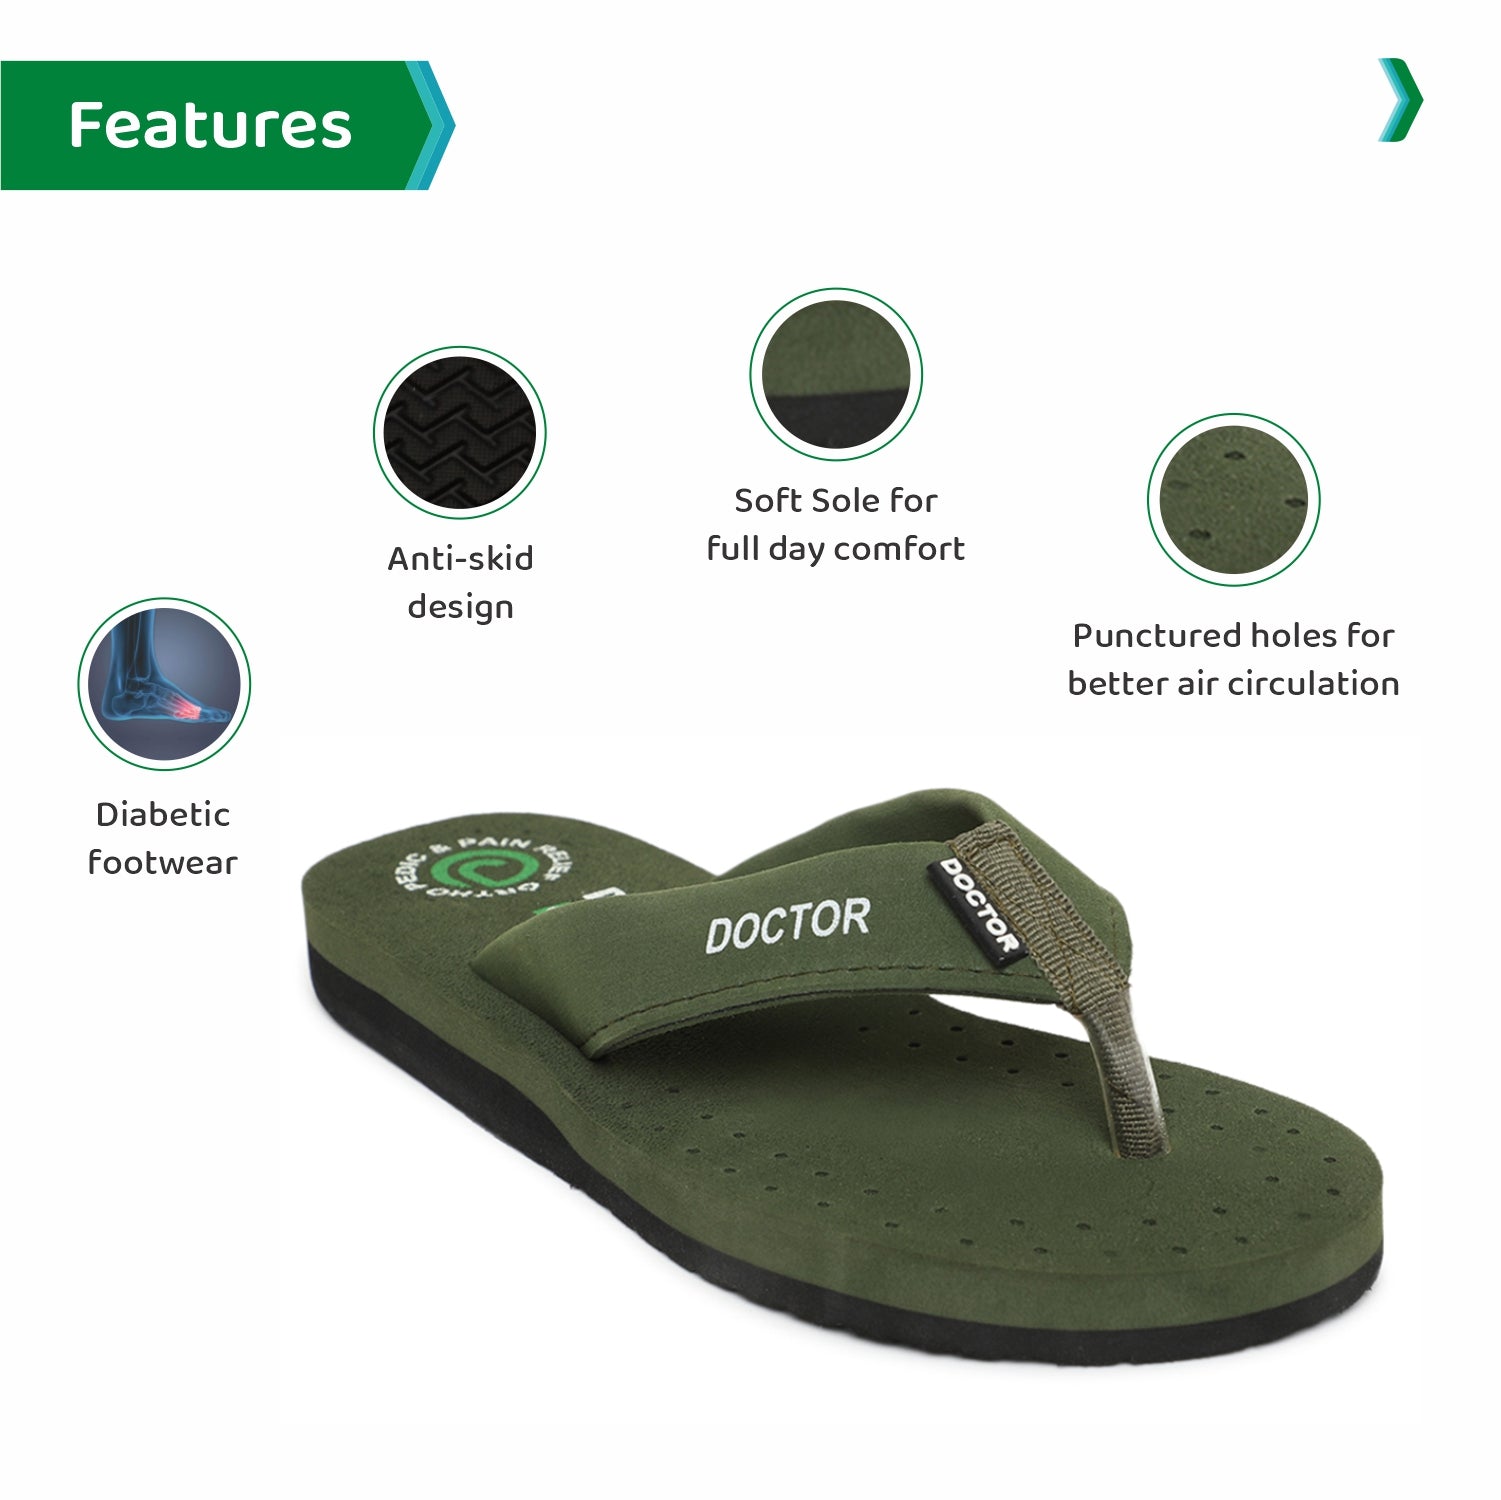 ORTHO JOY Extra Soft Doctor Ortho Slippers for men.